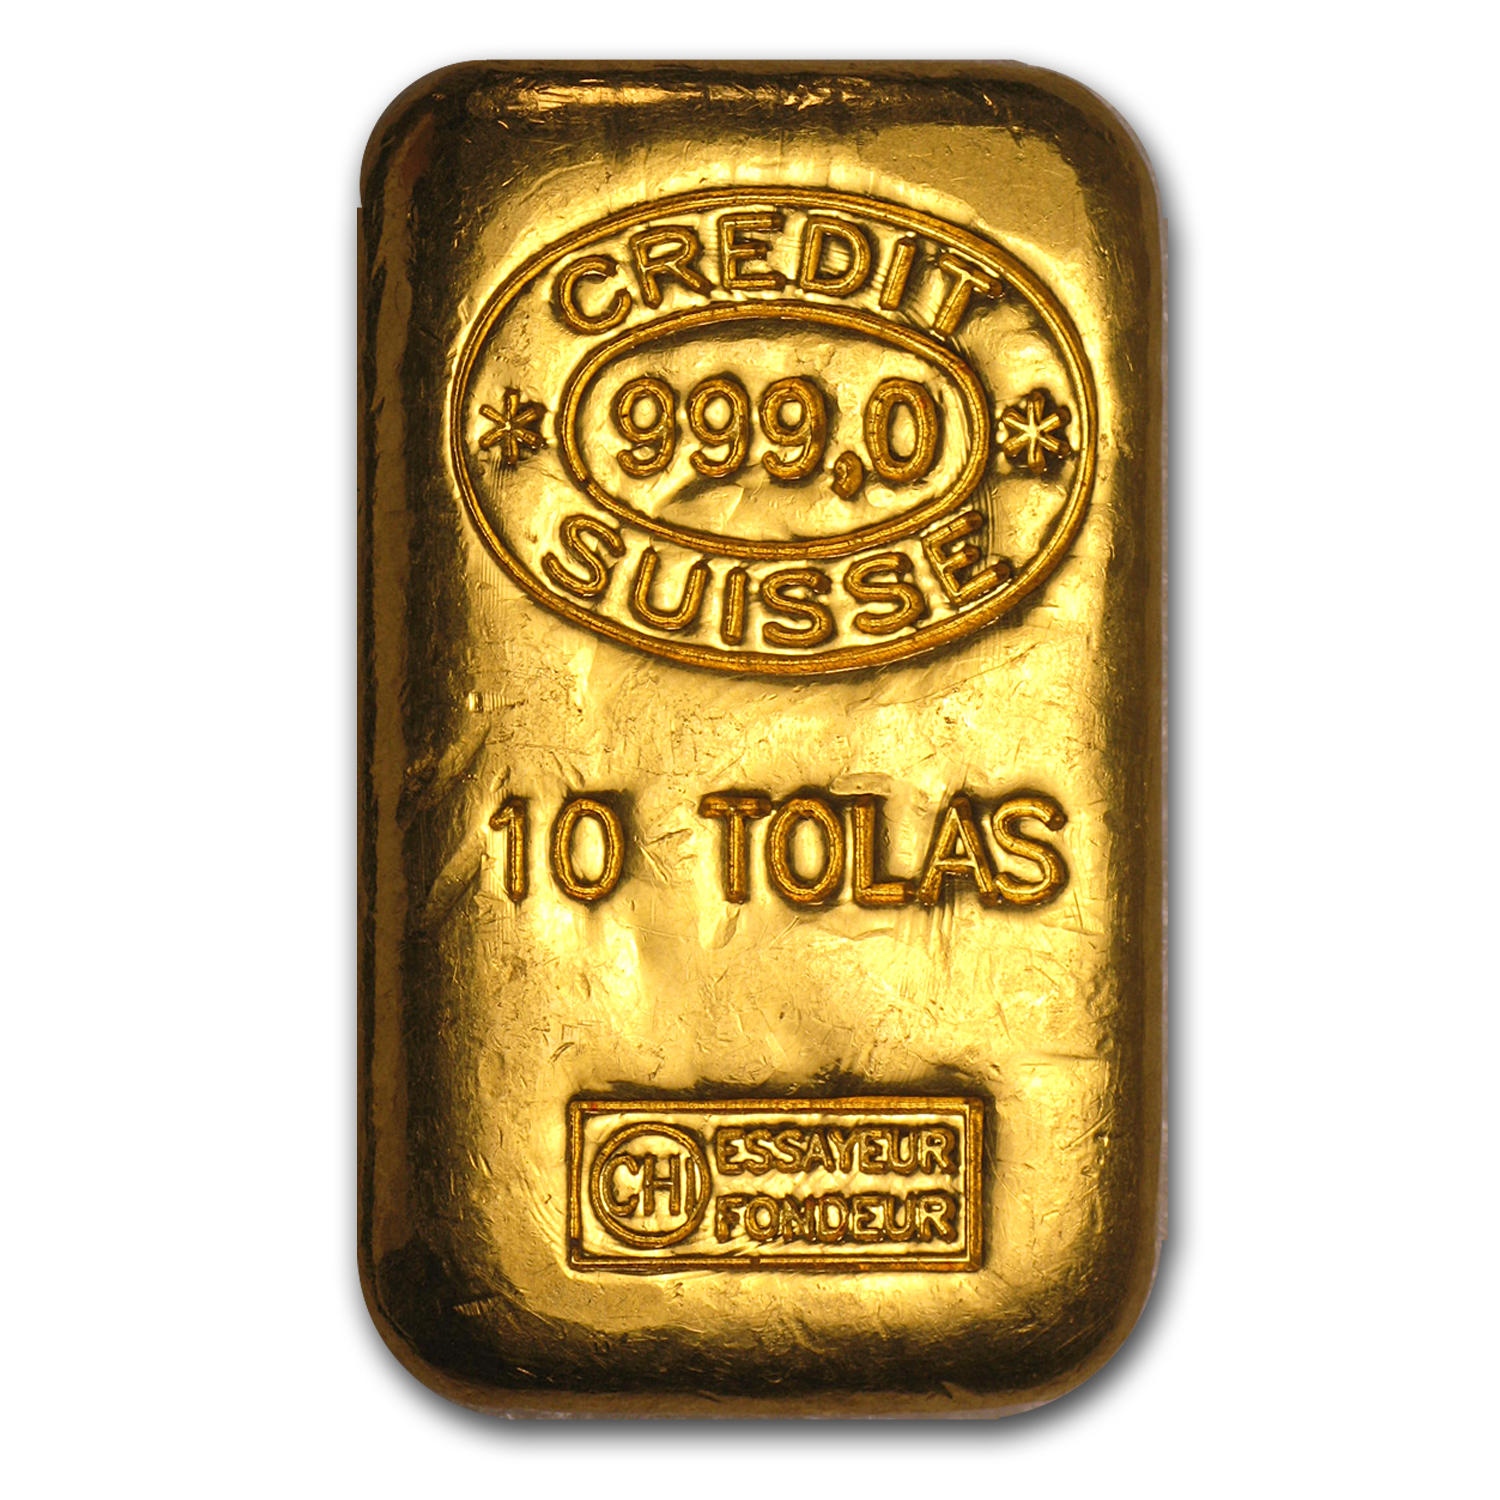 credit suisse gold bar keychain